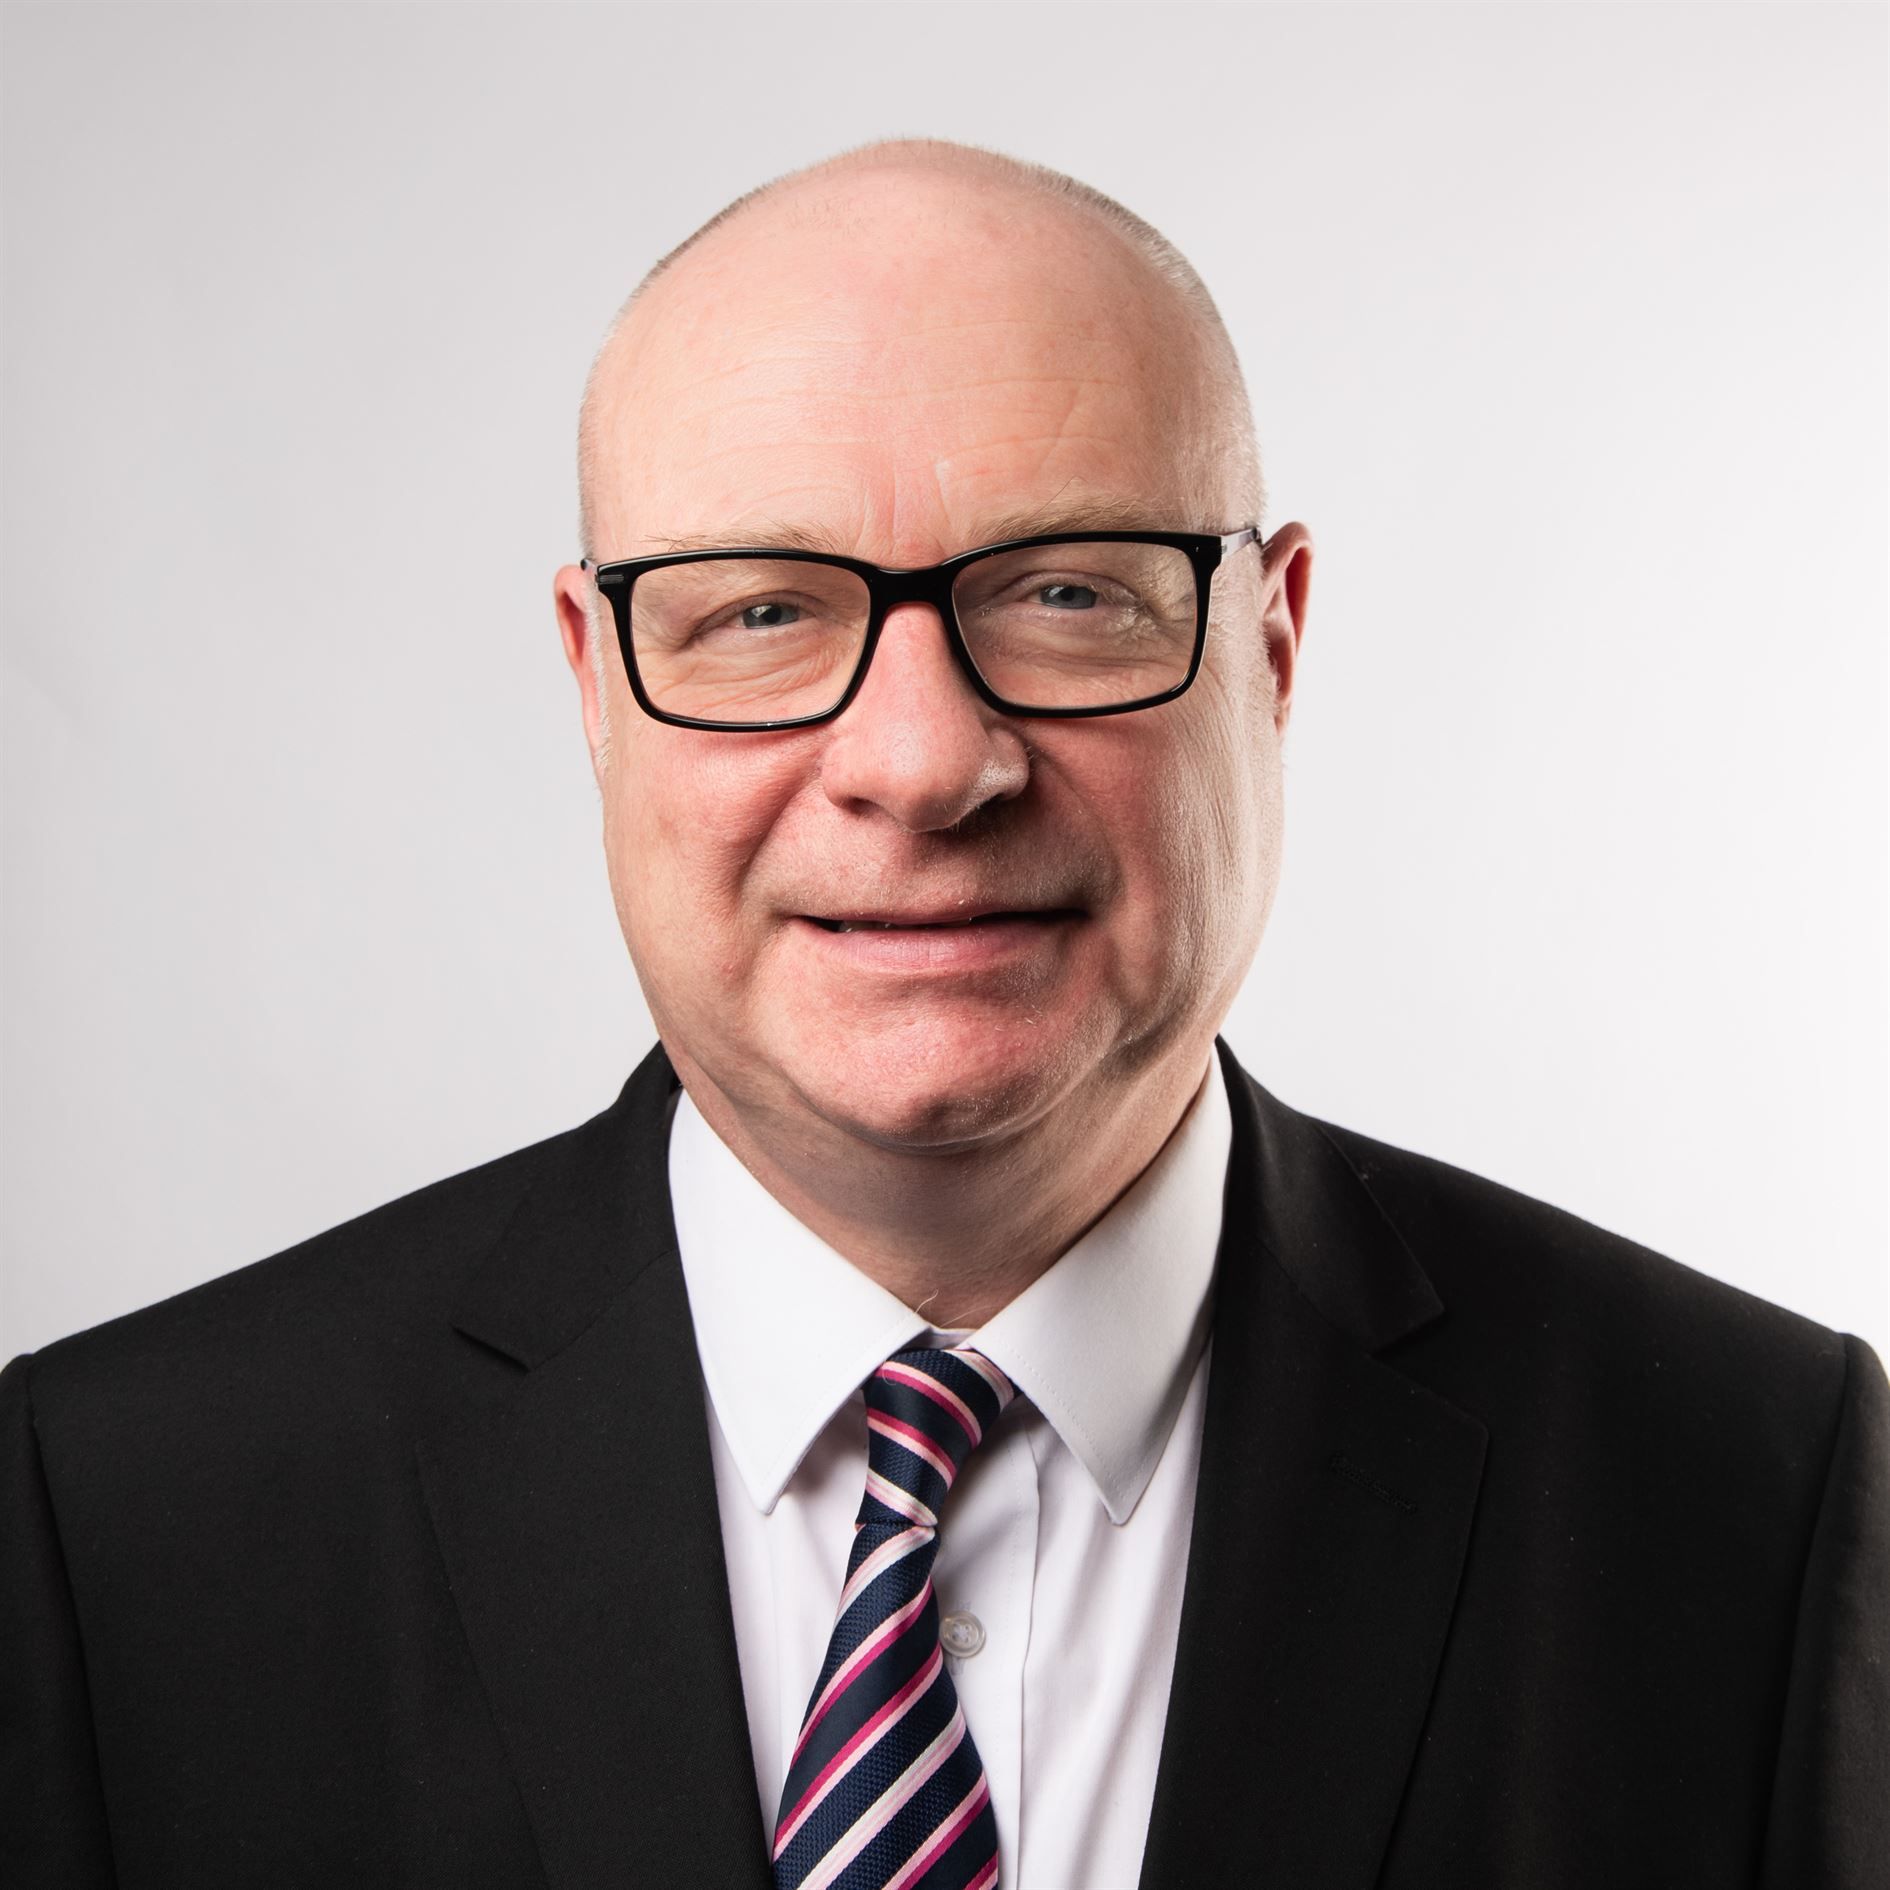 Fairstone financial adviser Mark Houldey